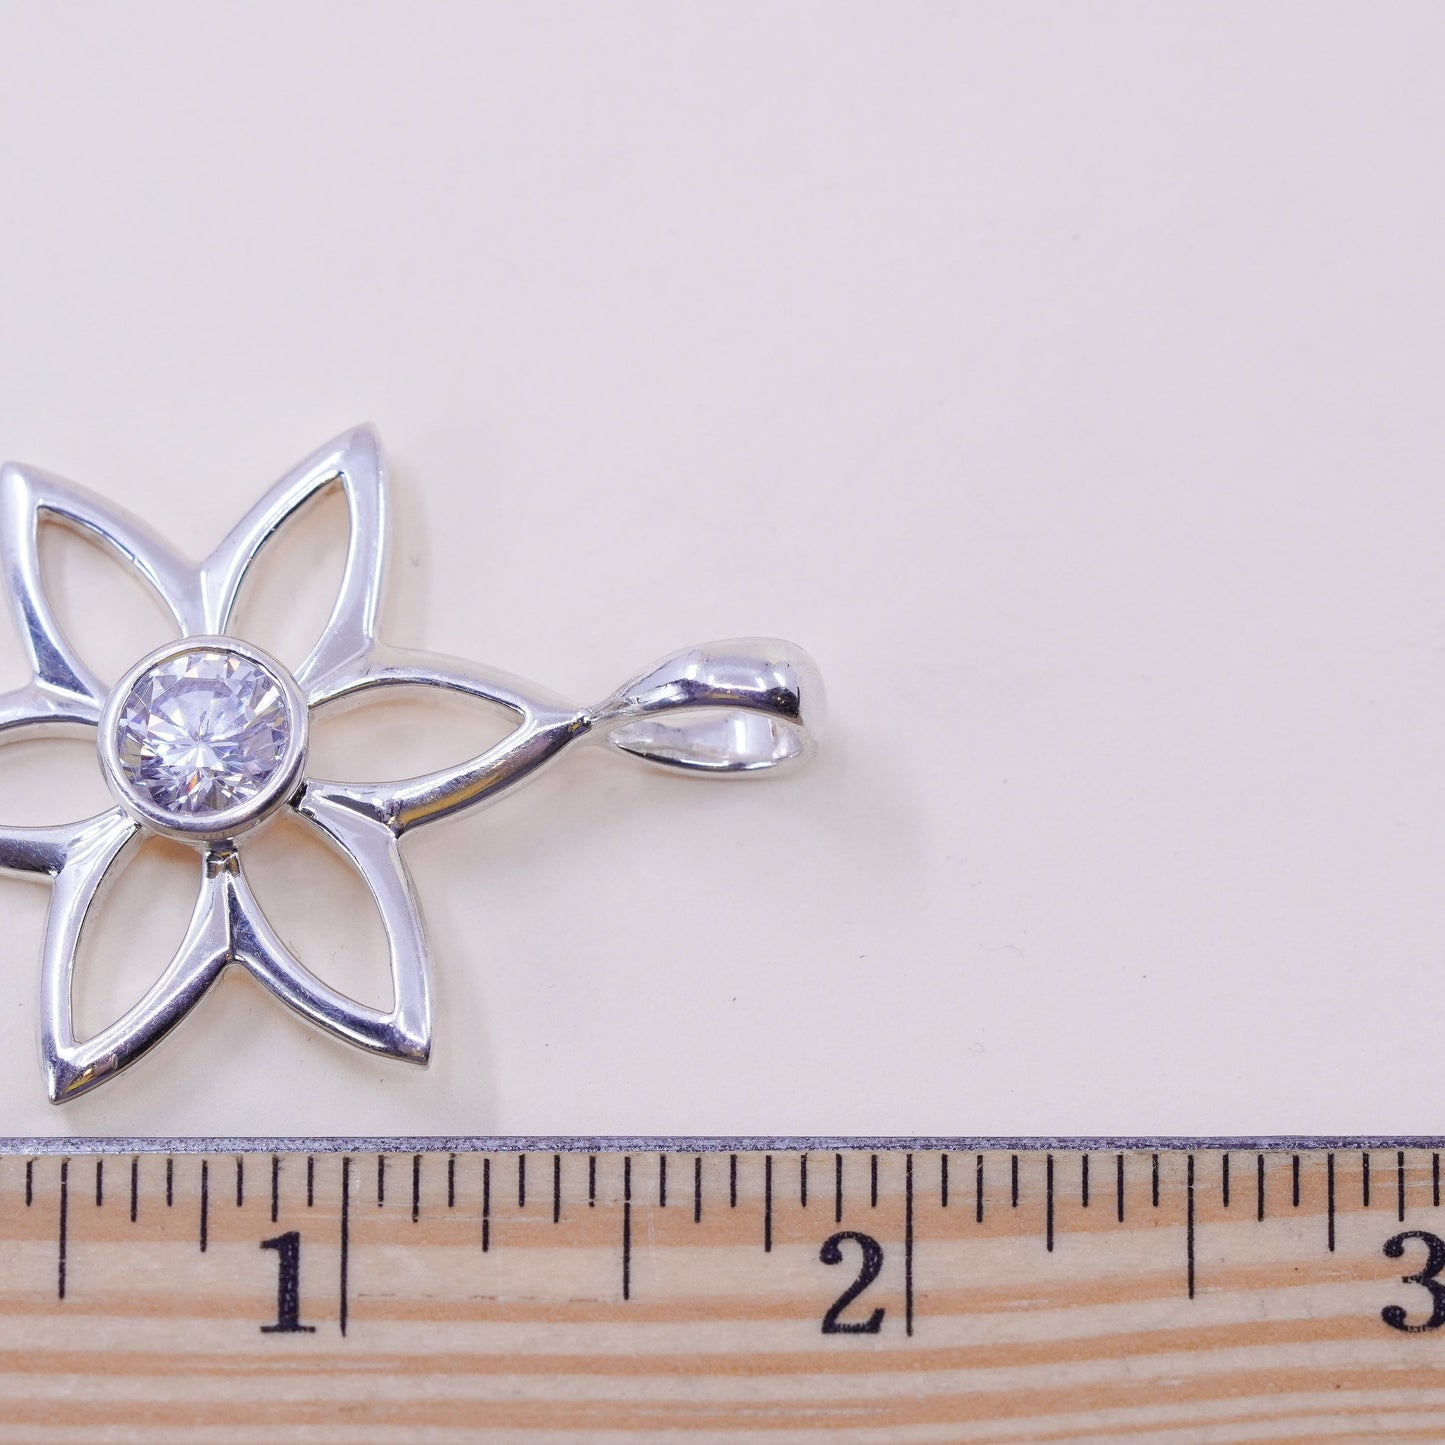 silpada sterling silver pendant, S1195 Silver 925 Star/flower Pendant Cz Center